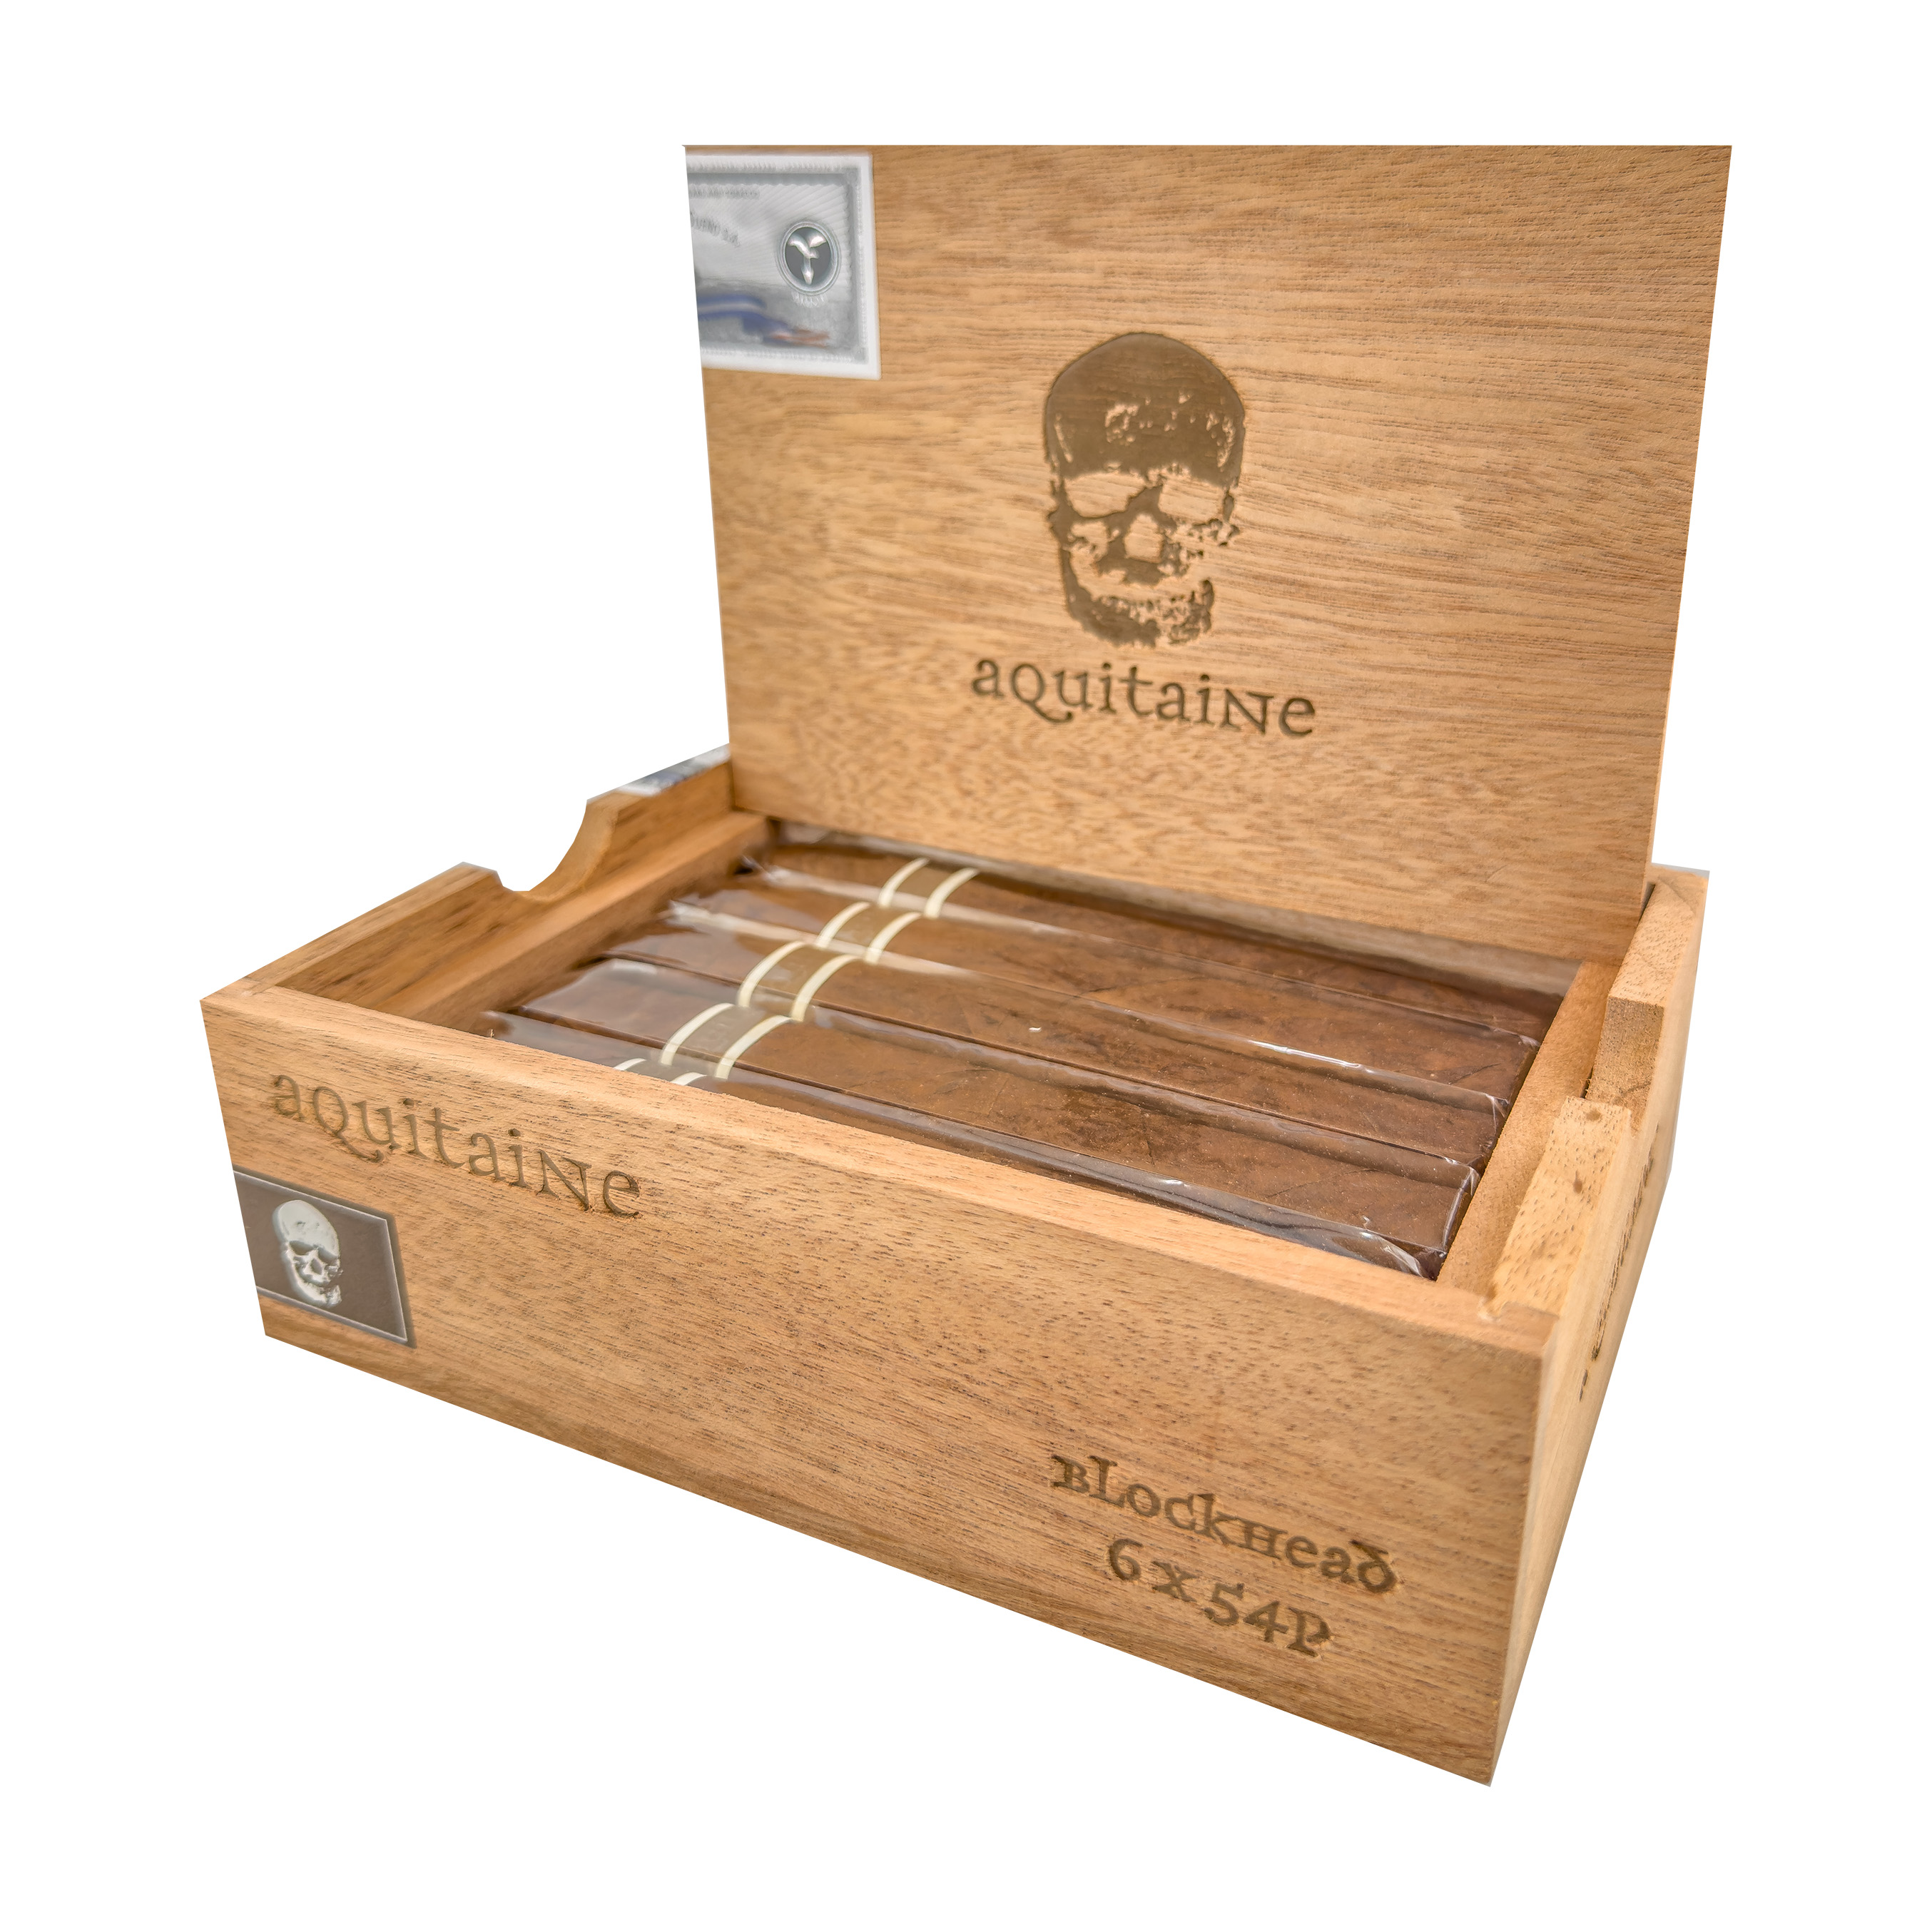 Aquitaine Blockhead Box Press Toro Cigar - Box